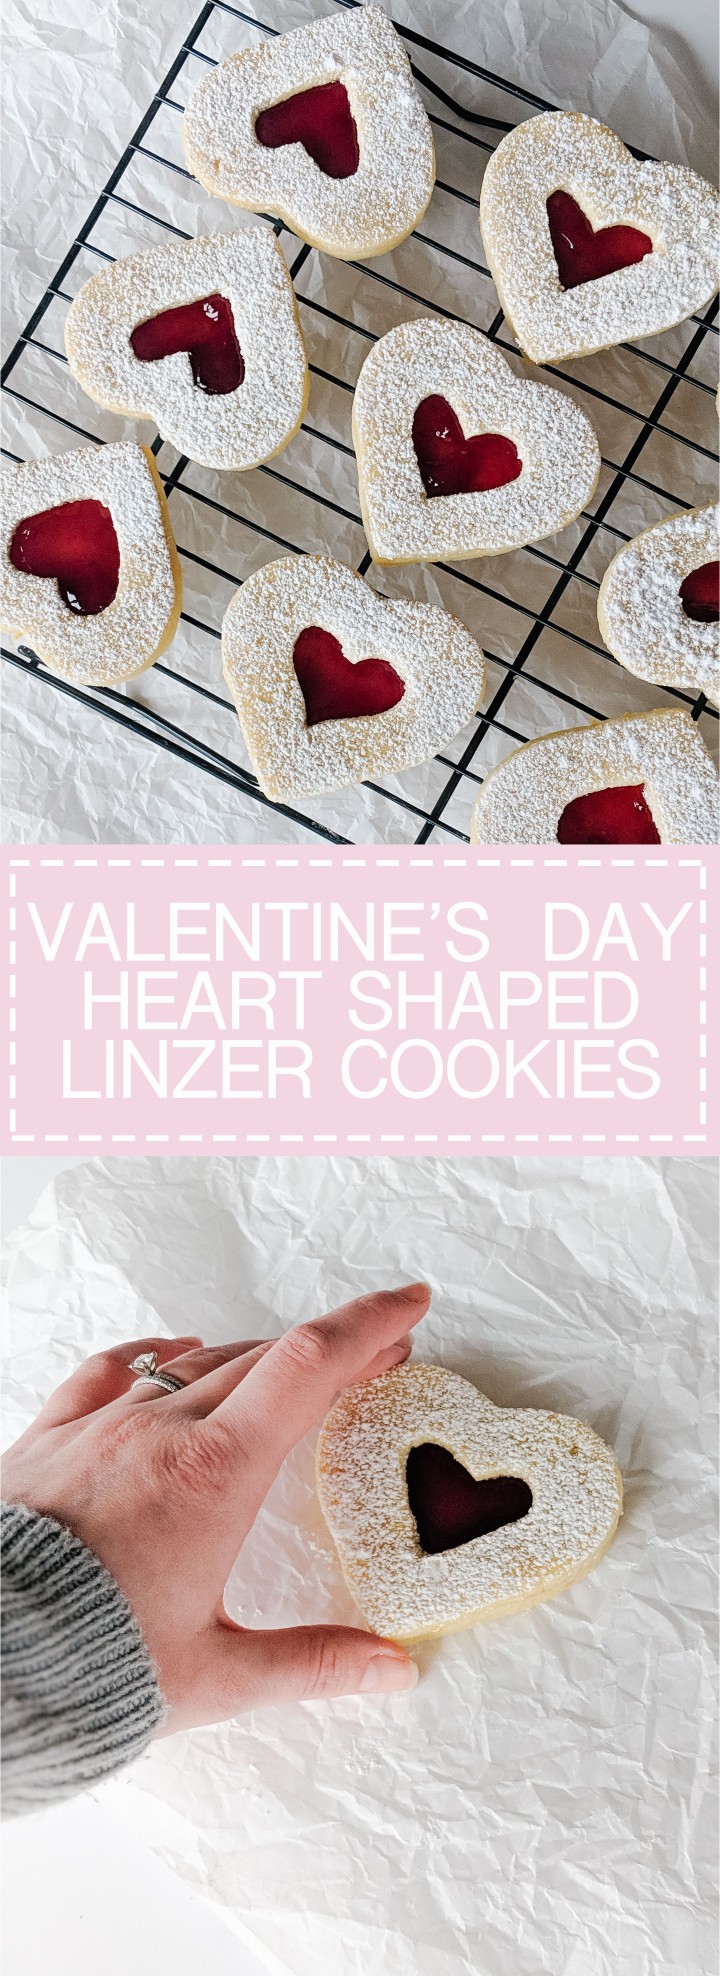 Lemon Raspberry Linzer Cookies - Valentine's Day Treats, yummy!